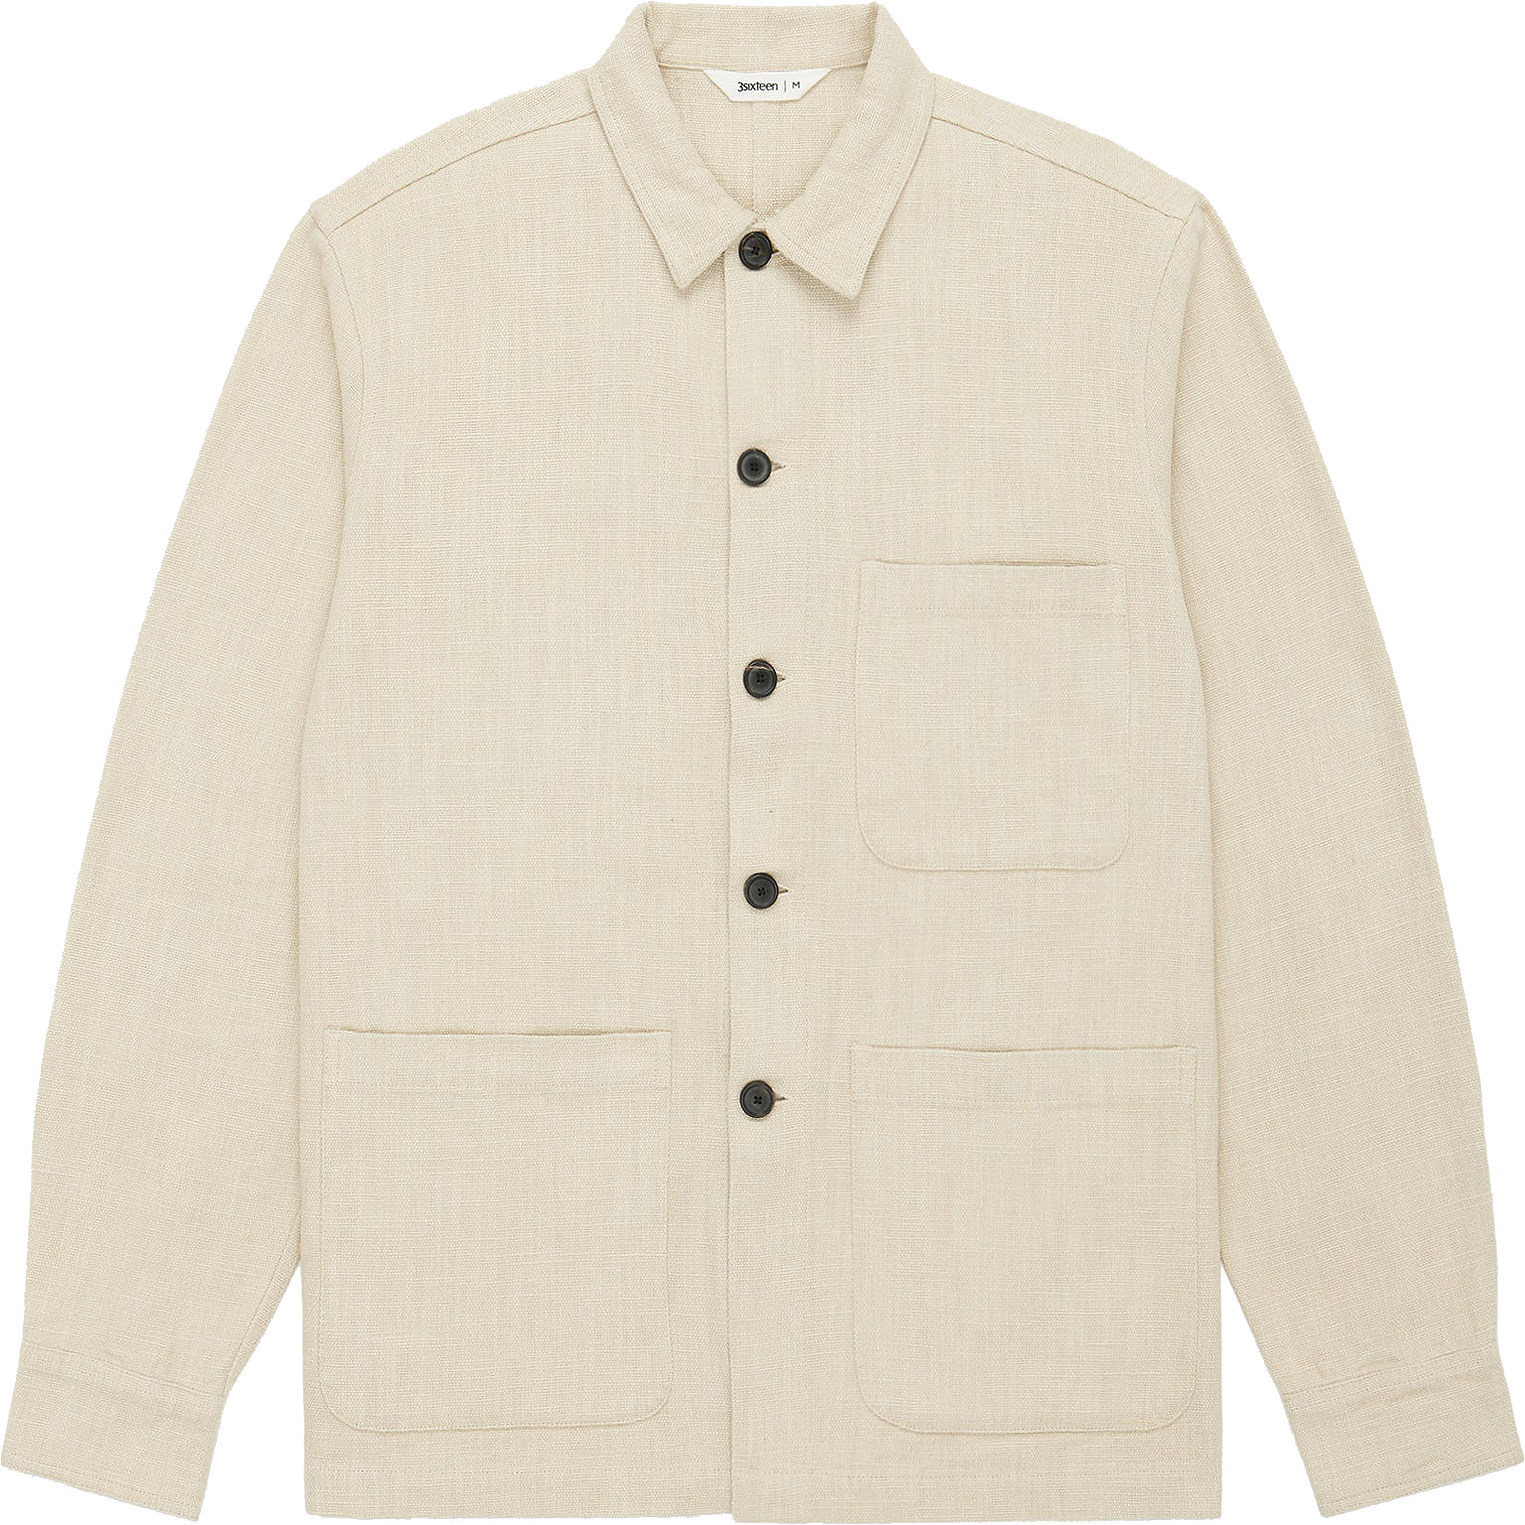 Cotton / Linen Shop Jacket - Alabaster